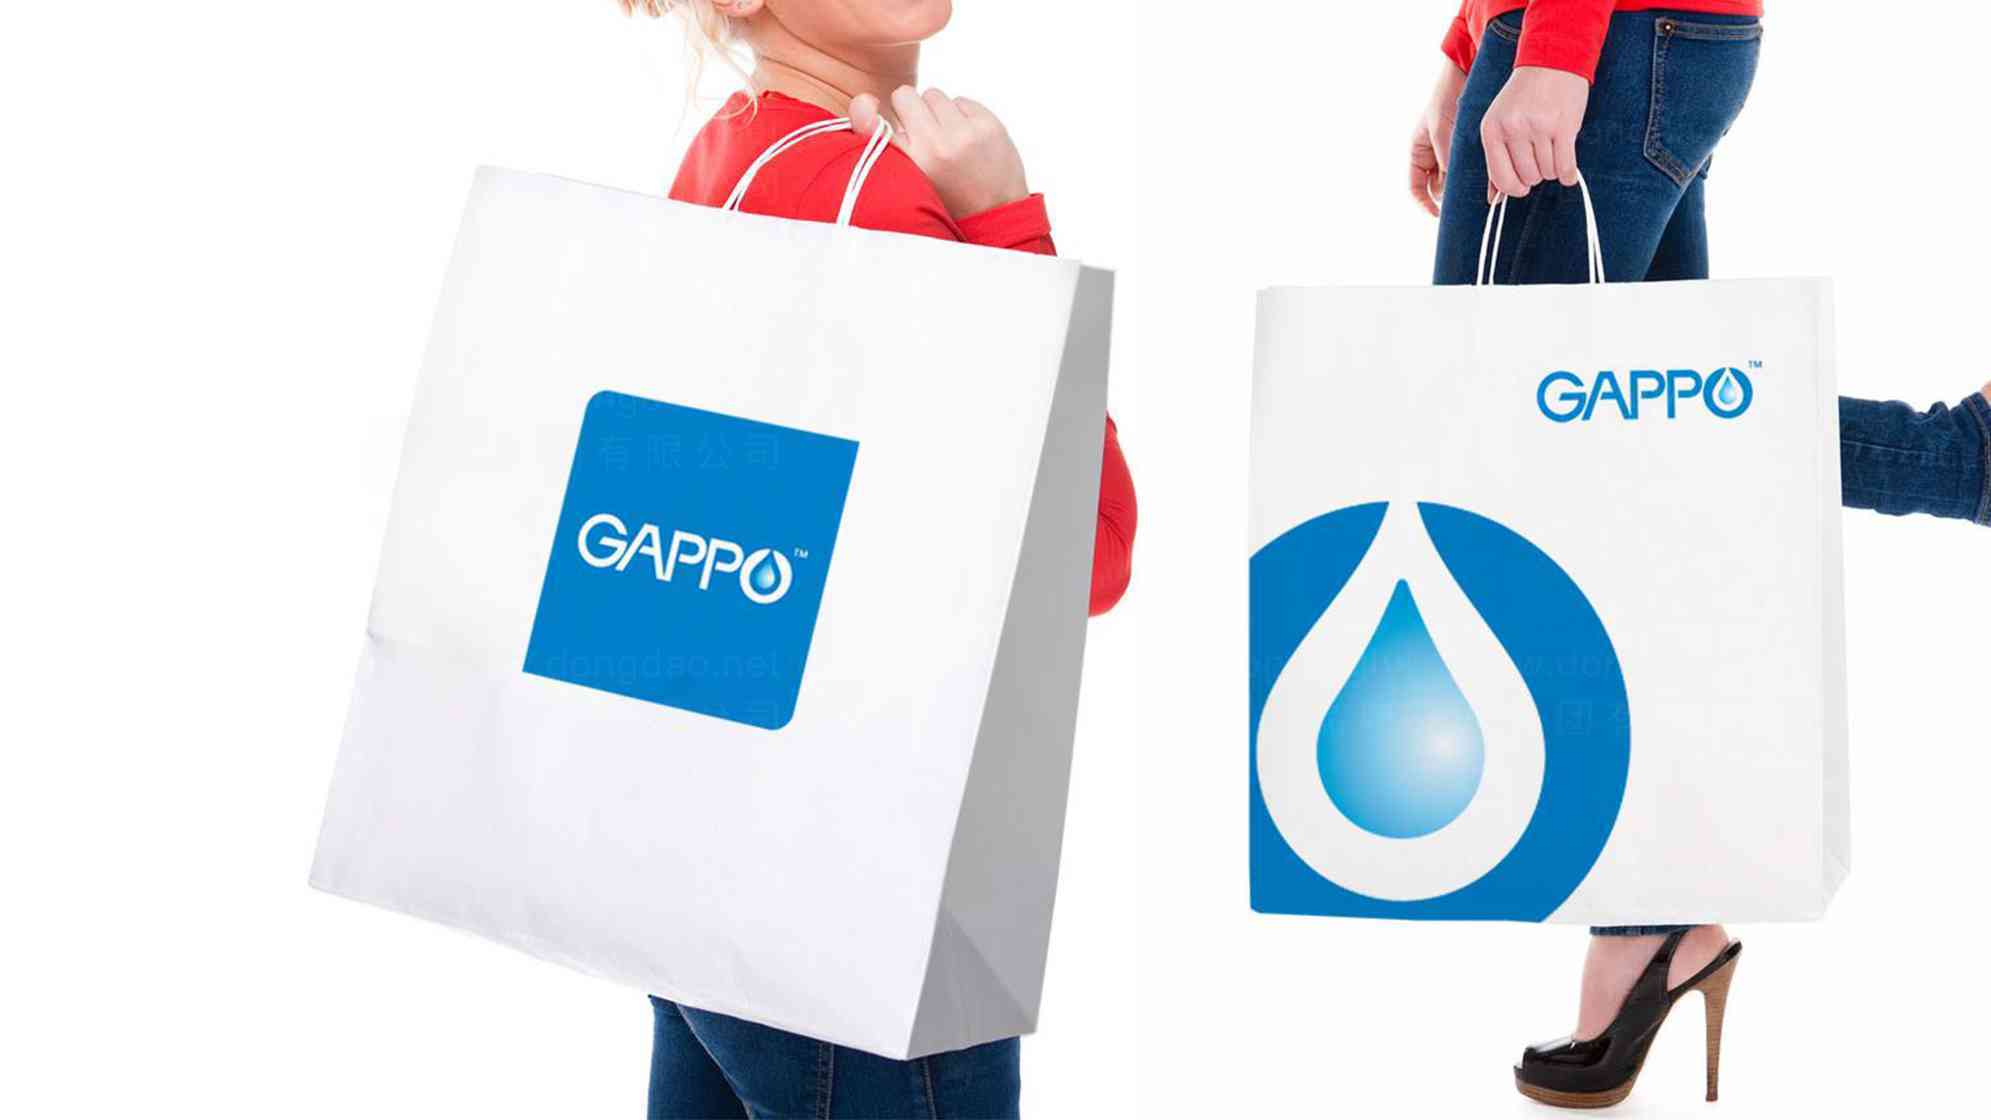 GAPPO卫浴logo设计图片素材_5